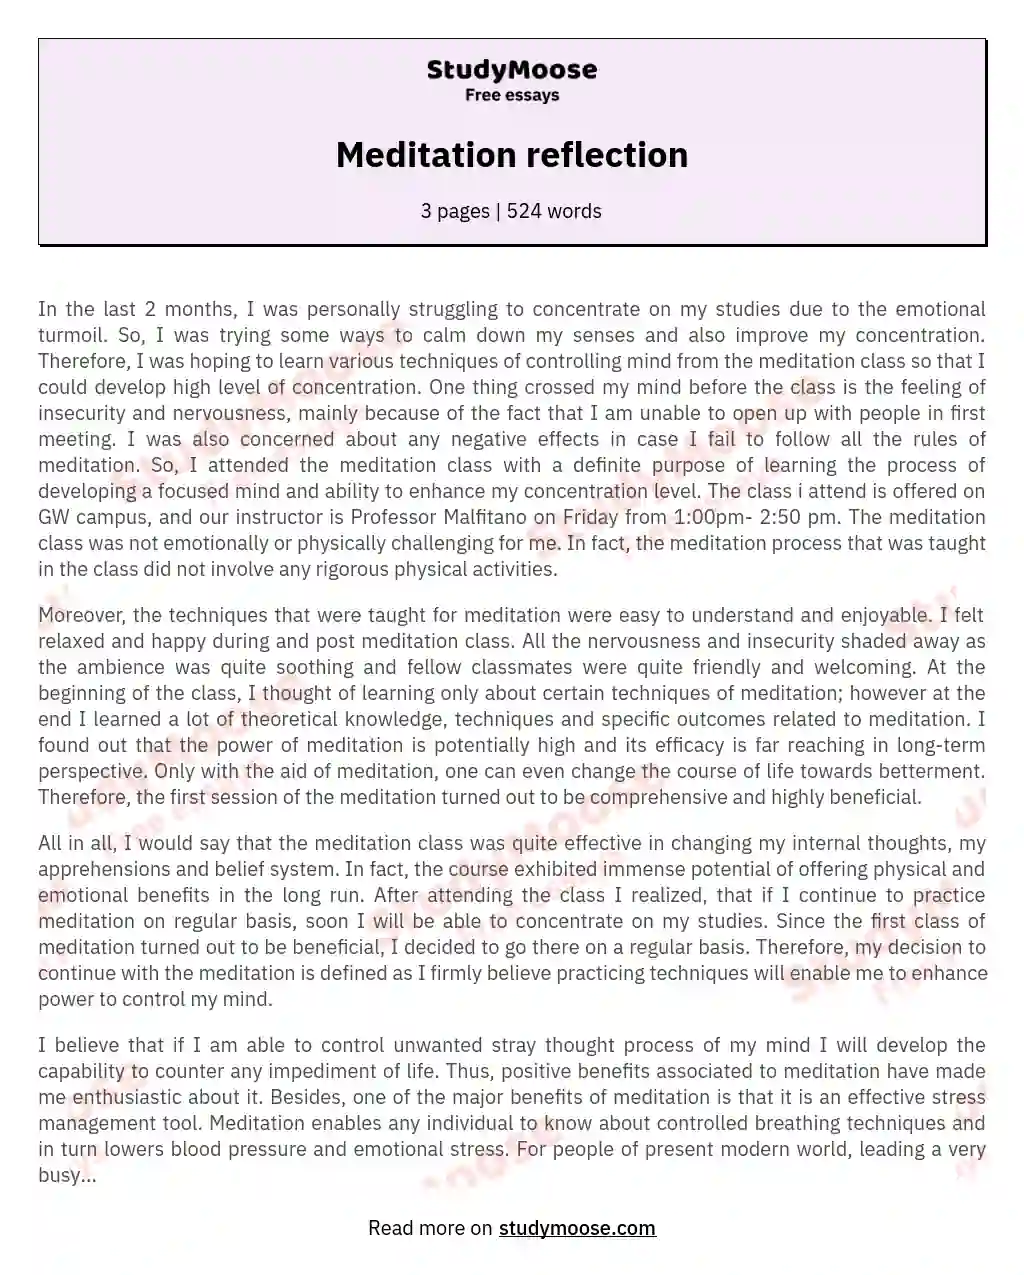 Meditation reflection essay